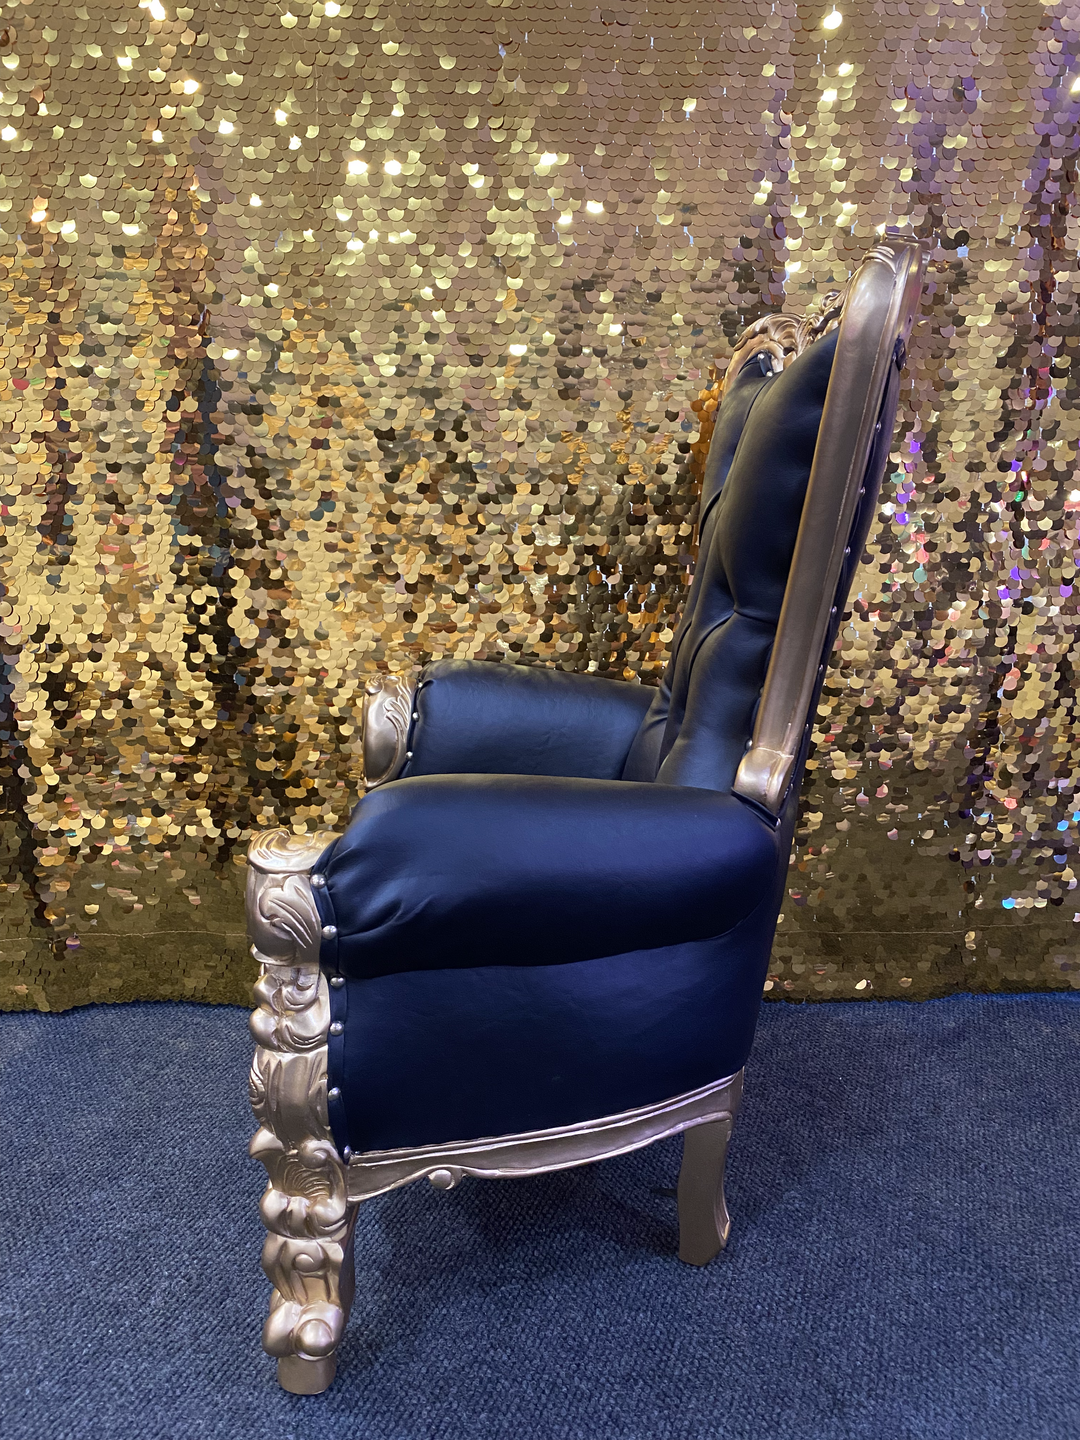 Kid's Throne Chair Gold/Black